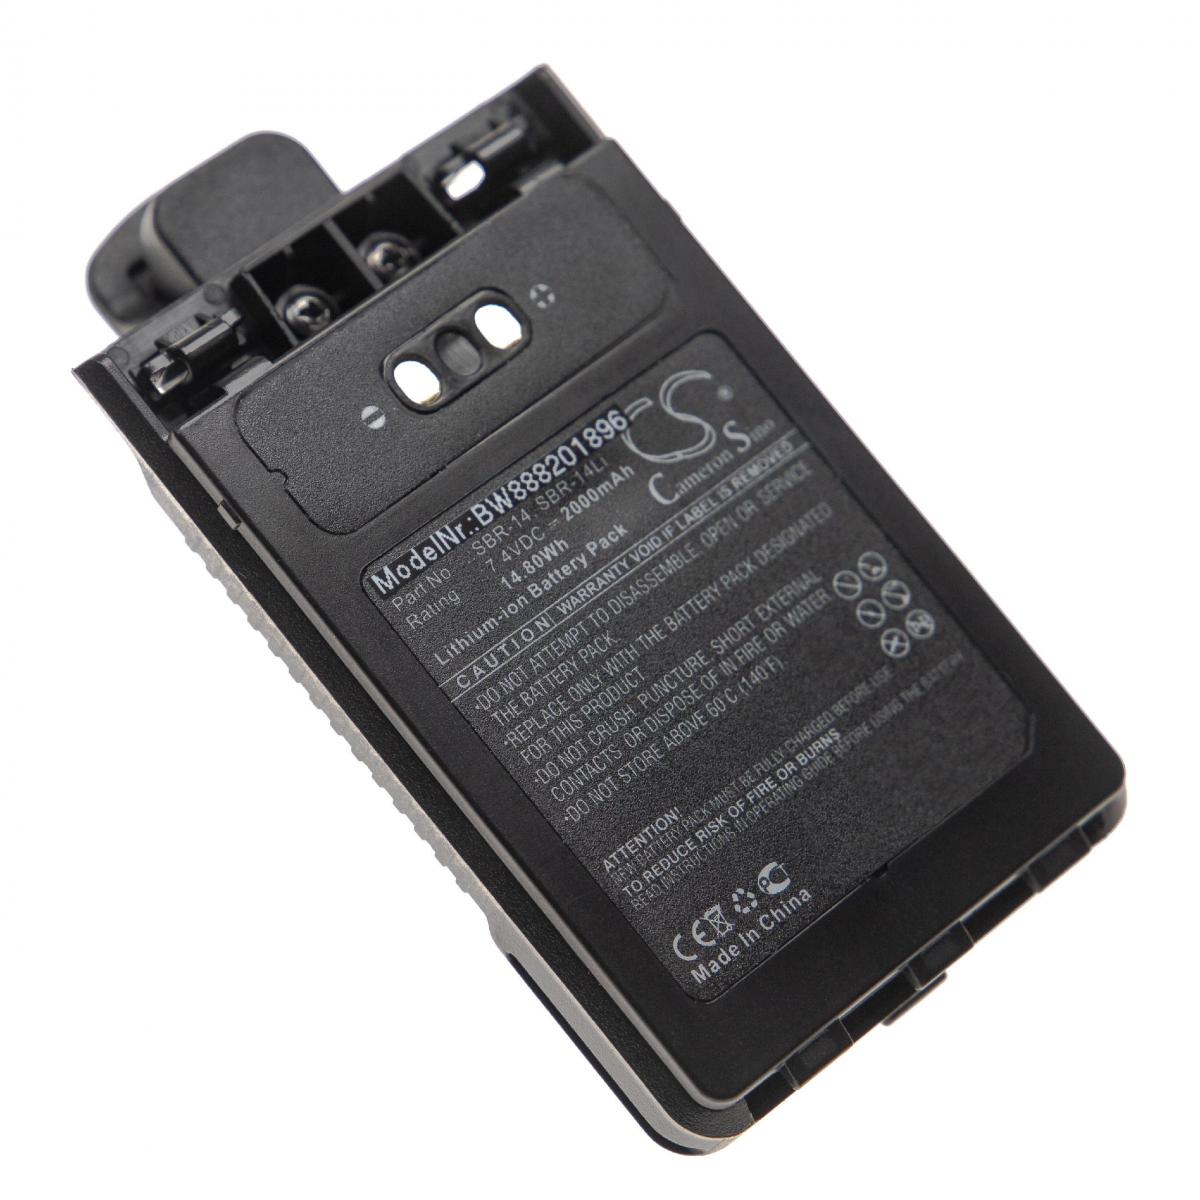 Vhbw - vhbw batterie remplace Yaesu SBR-14, SBR-14Li pour radio talkie-walkie (2000mAh 7,4V Li-Ion) - Autres accessoires smartphone